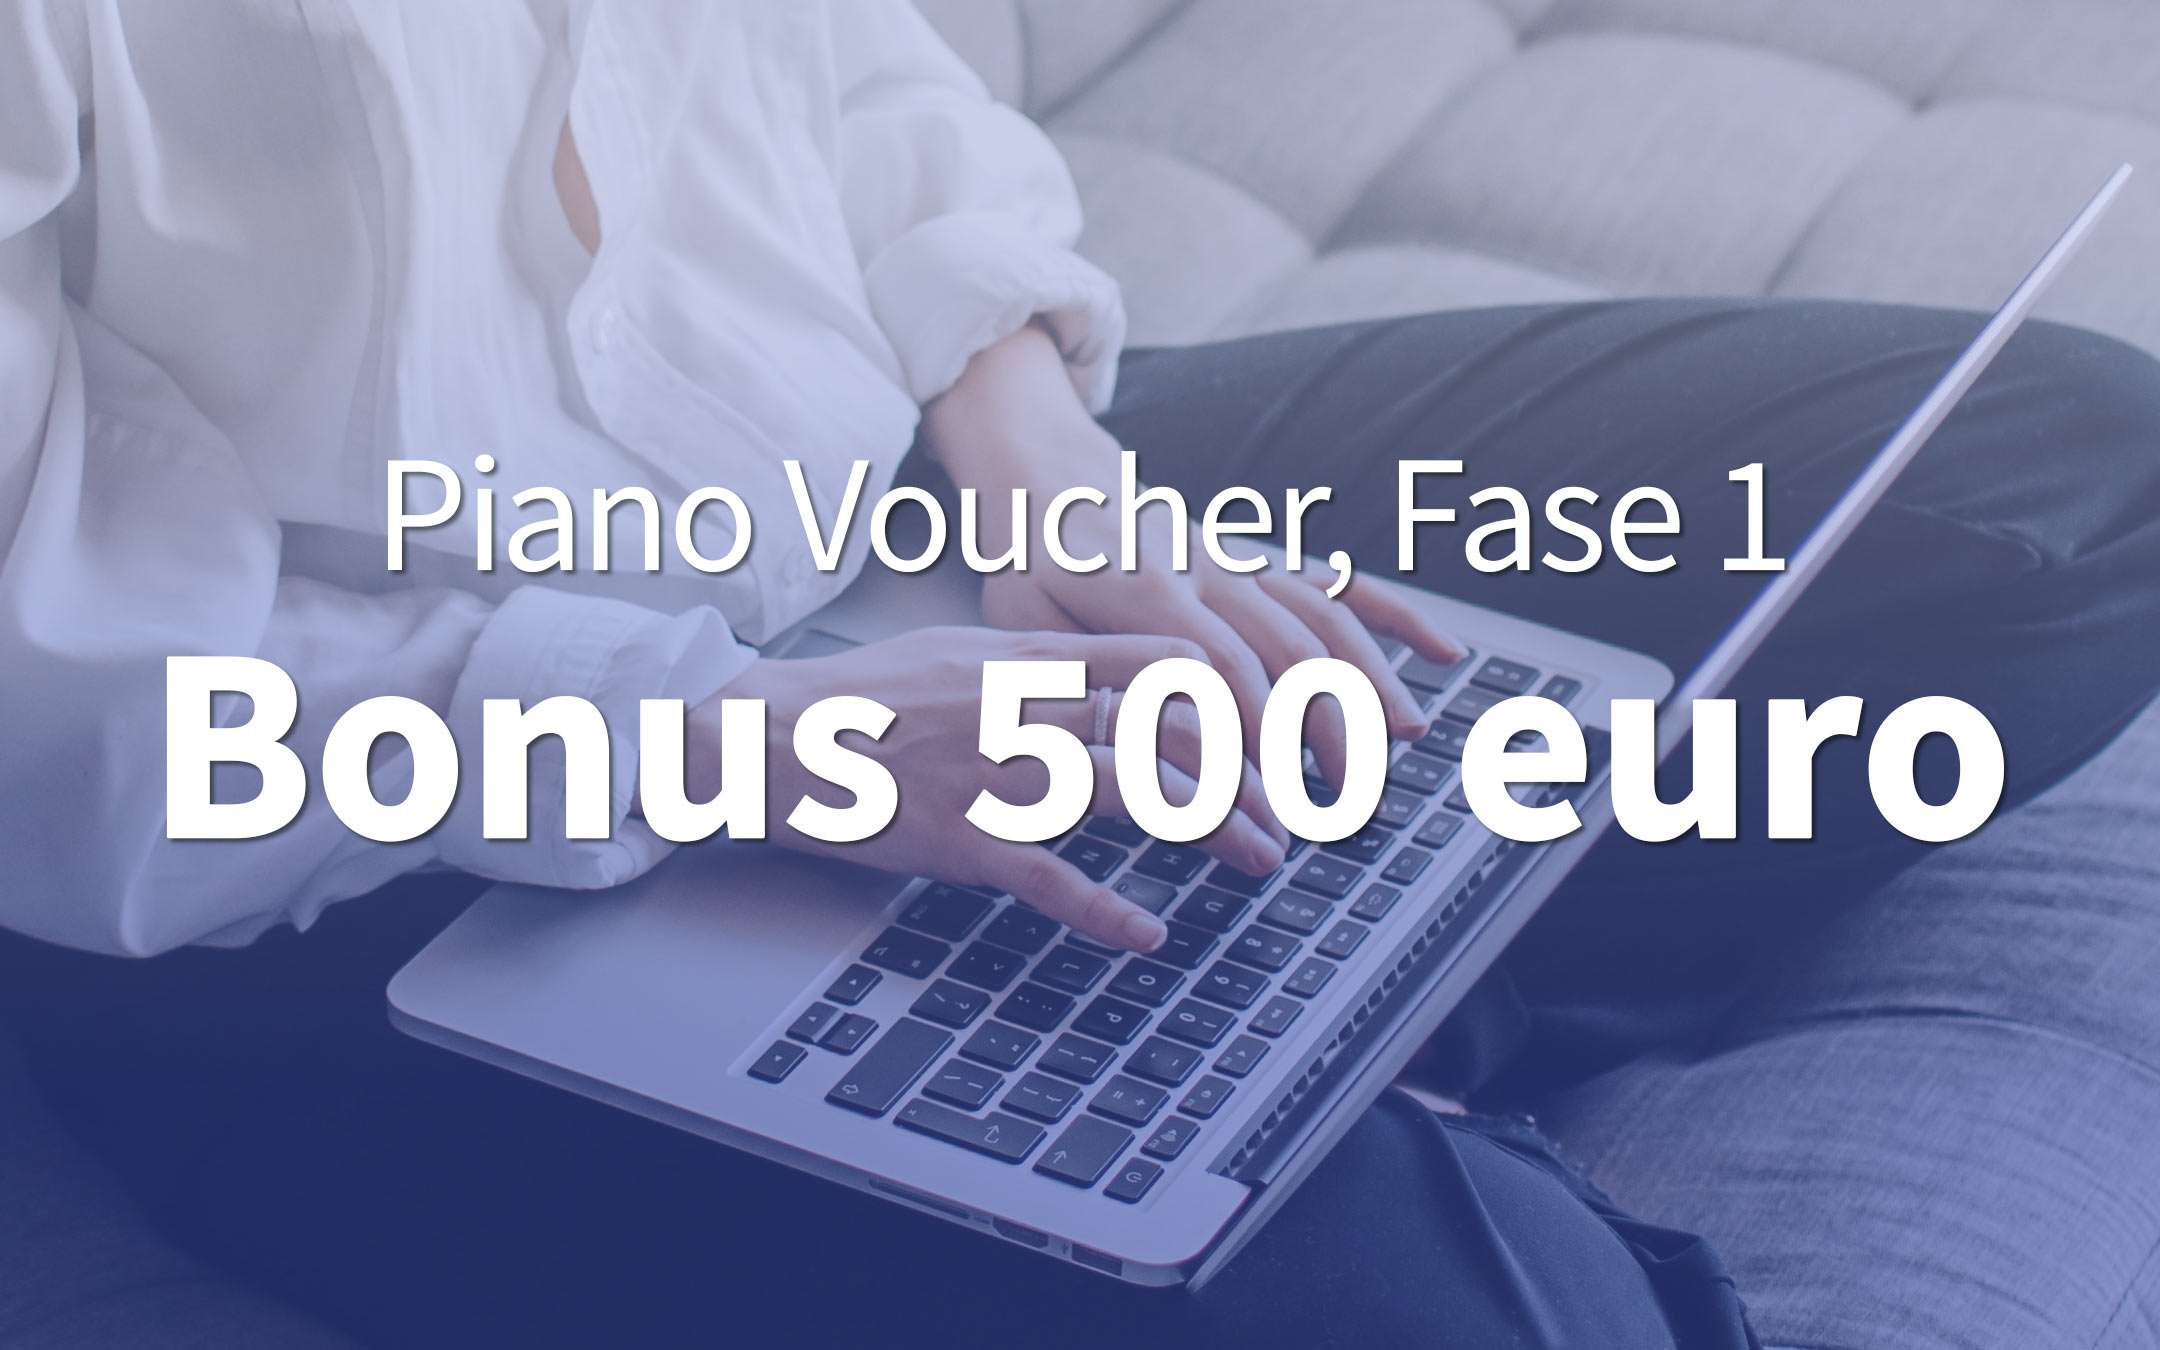 Bonus 500 euros: last clarifications from Infratel